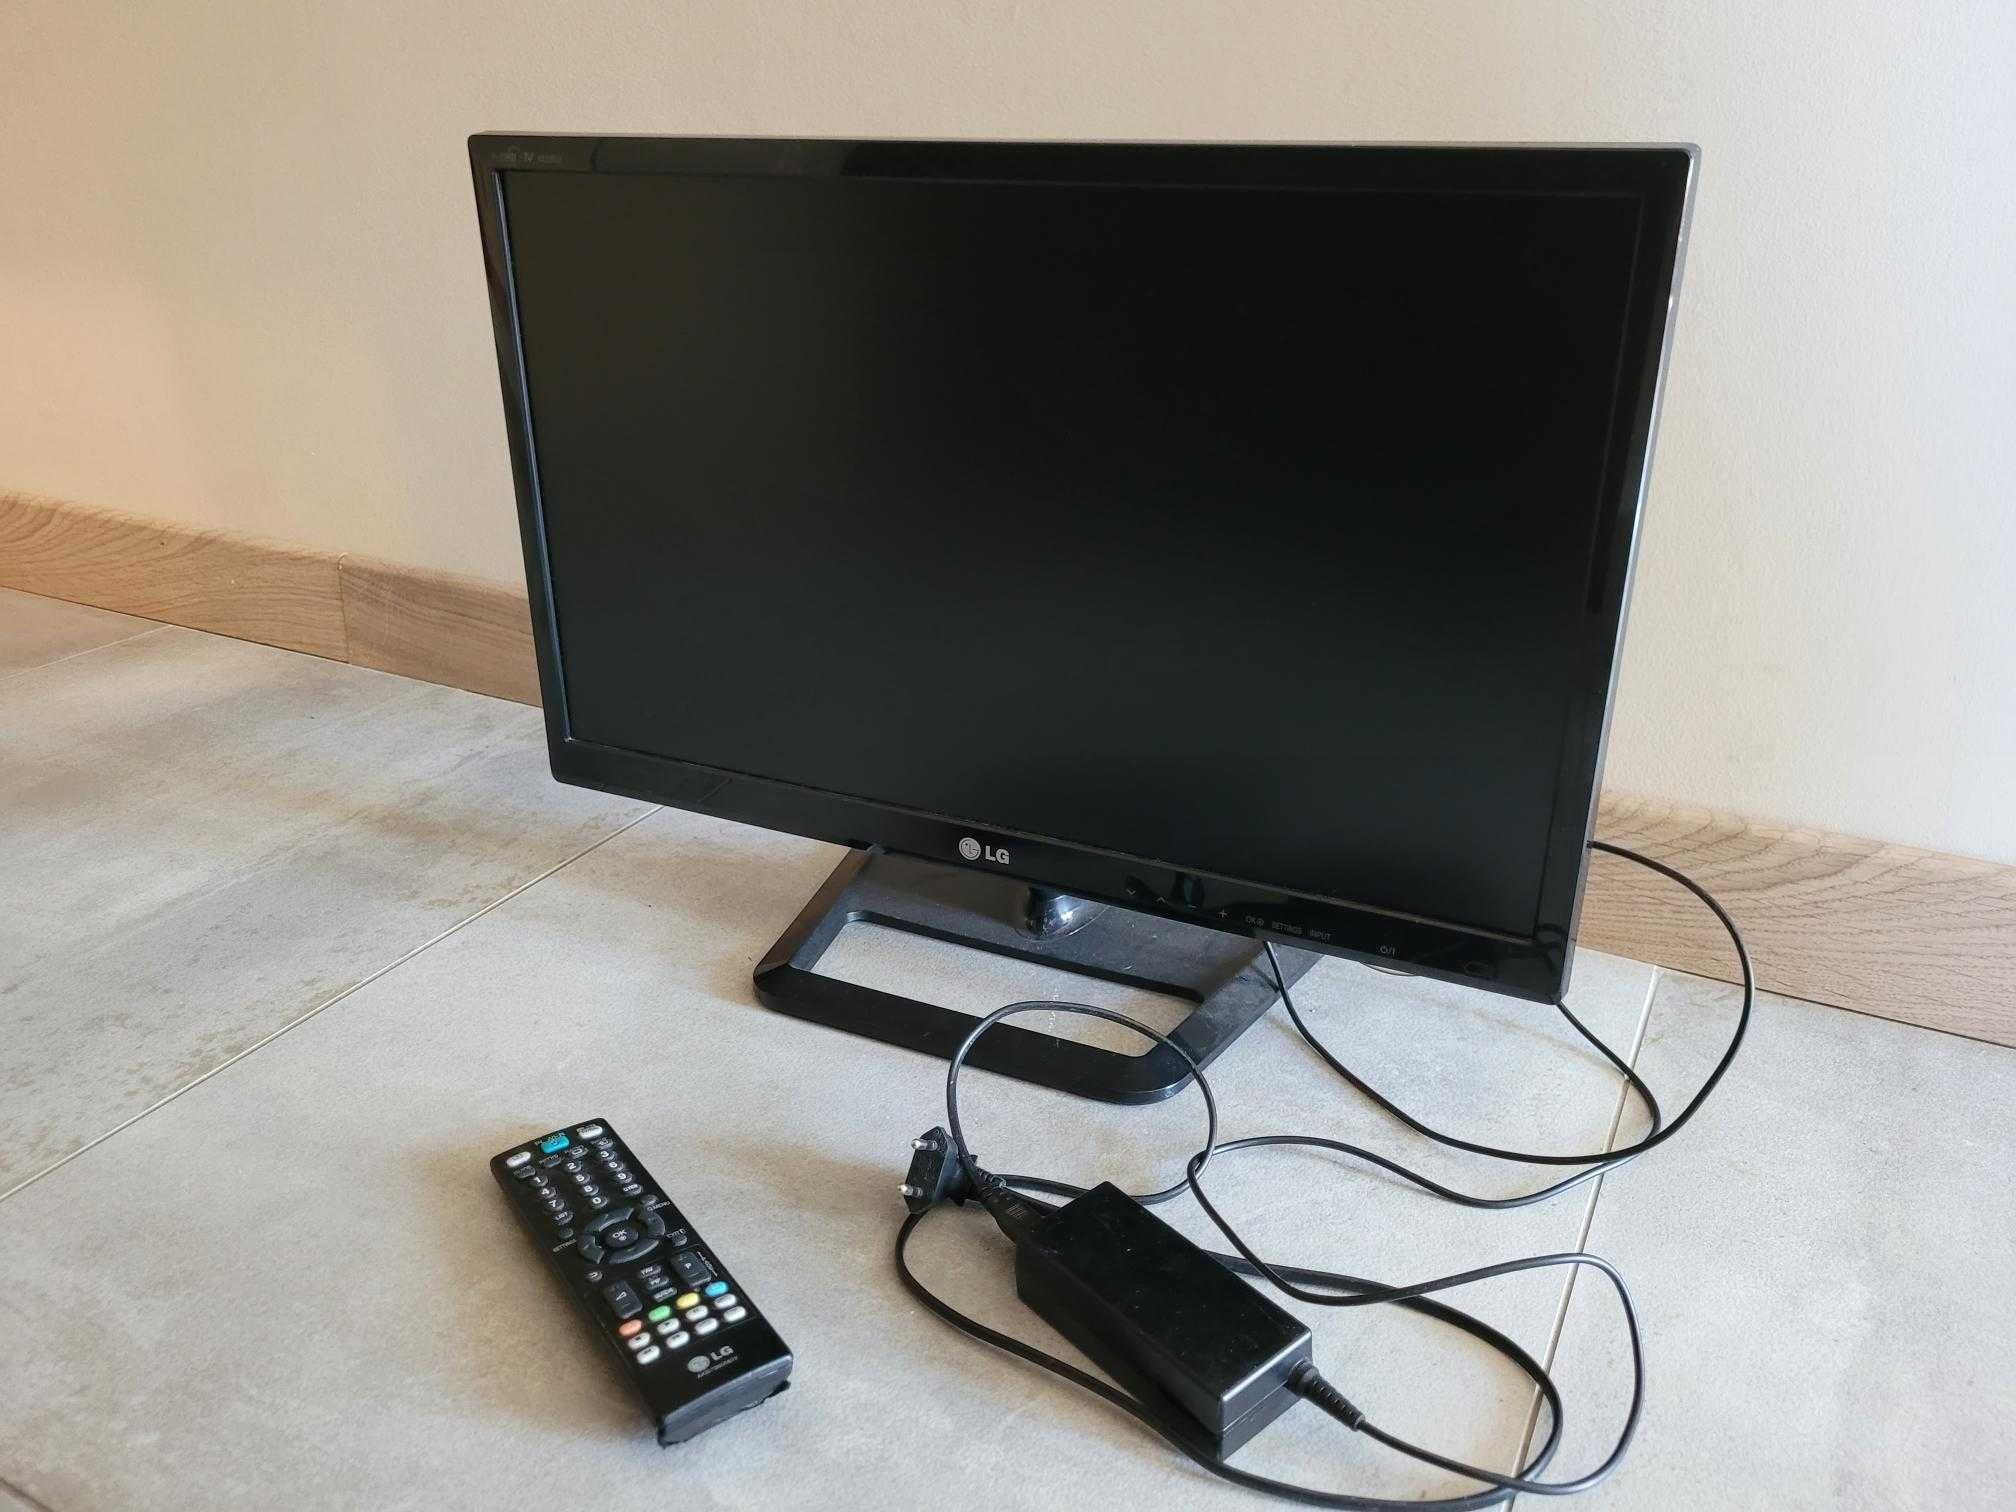 Monitor komputerowy LG z tunerem TV dvbt M3252 - dostawa GRATIS